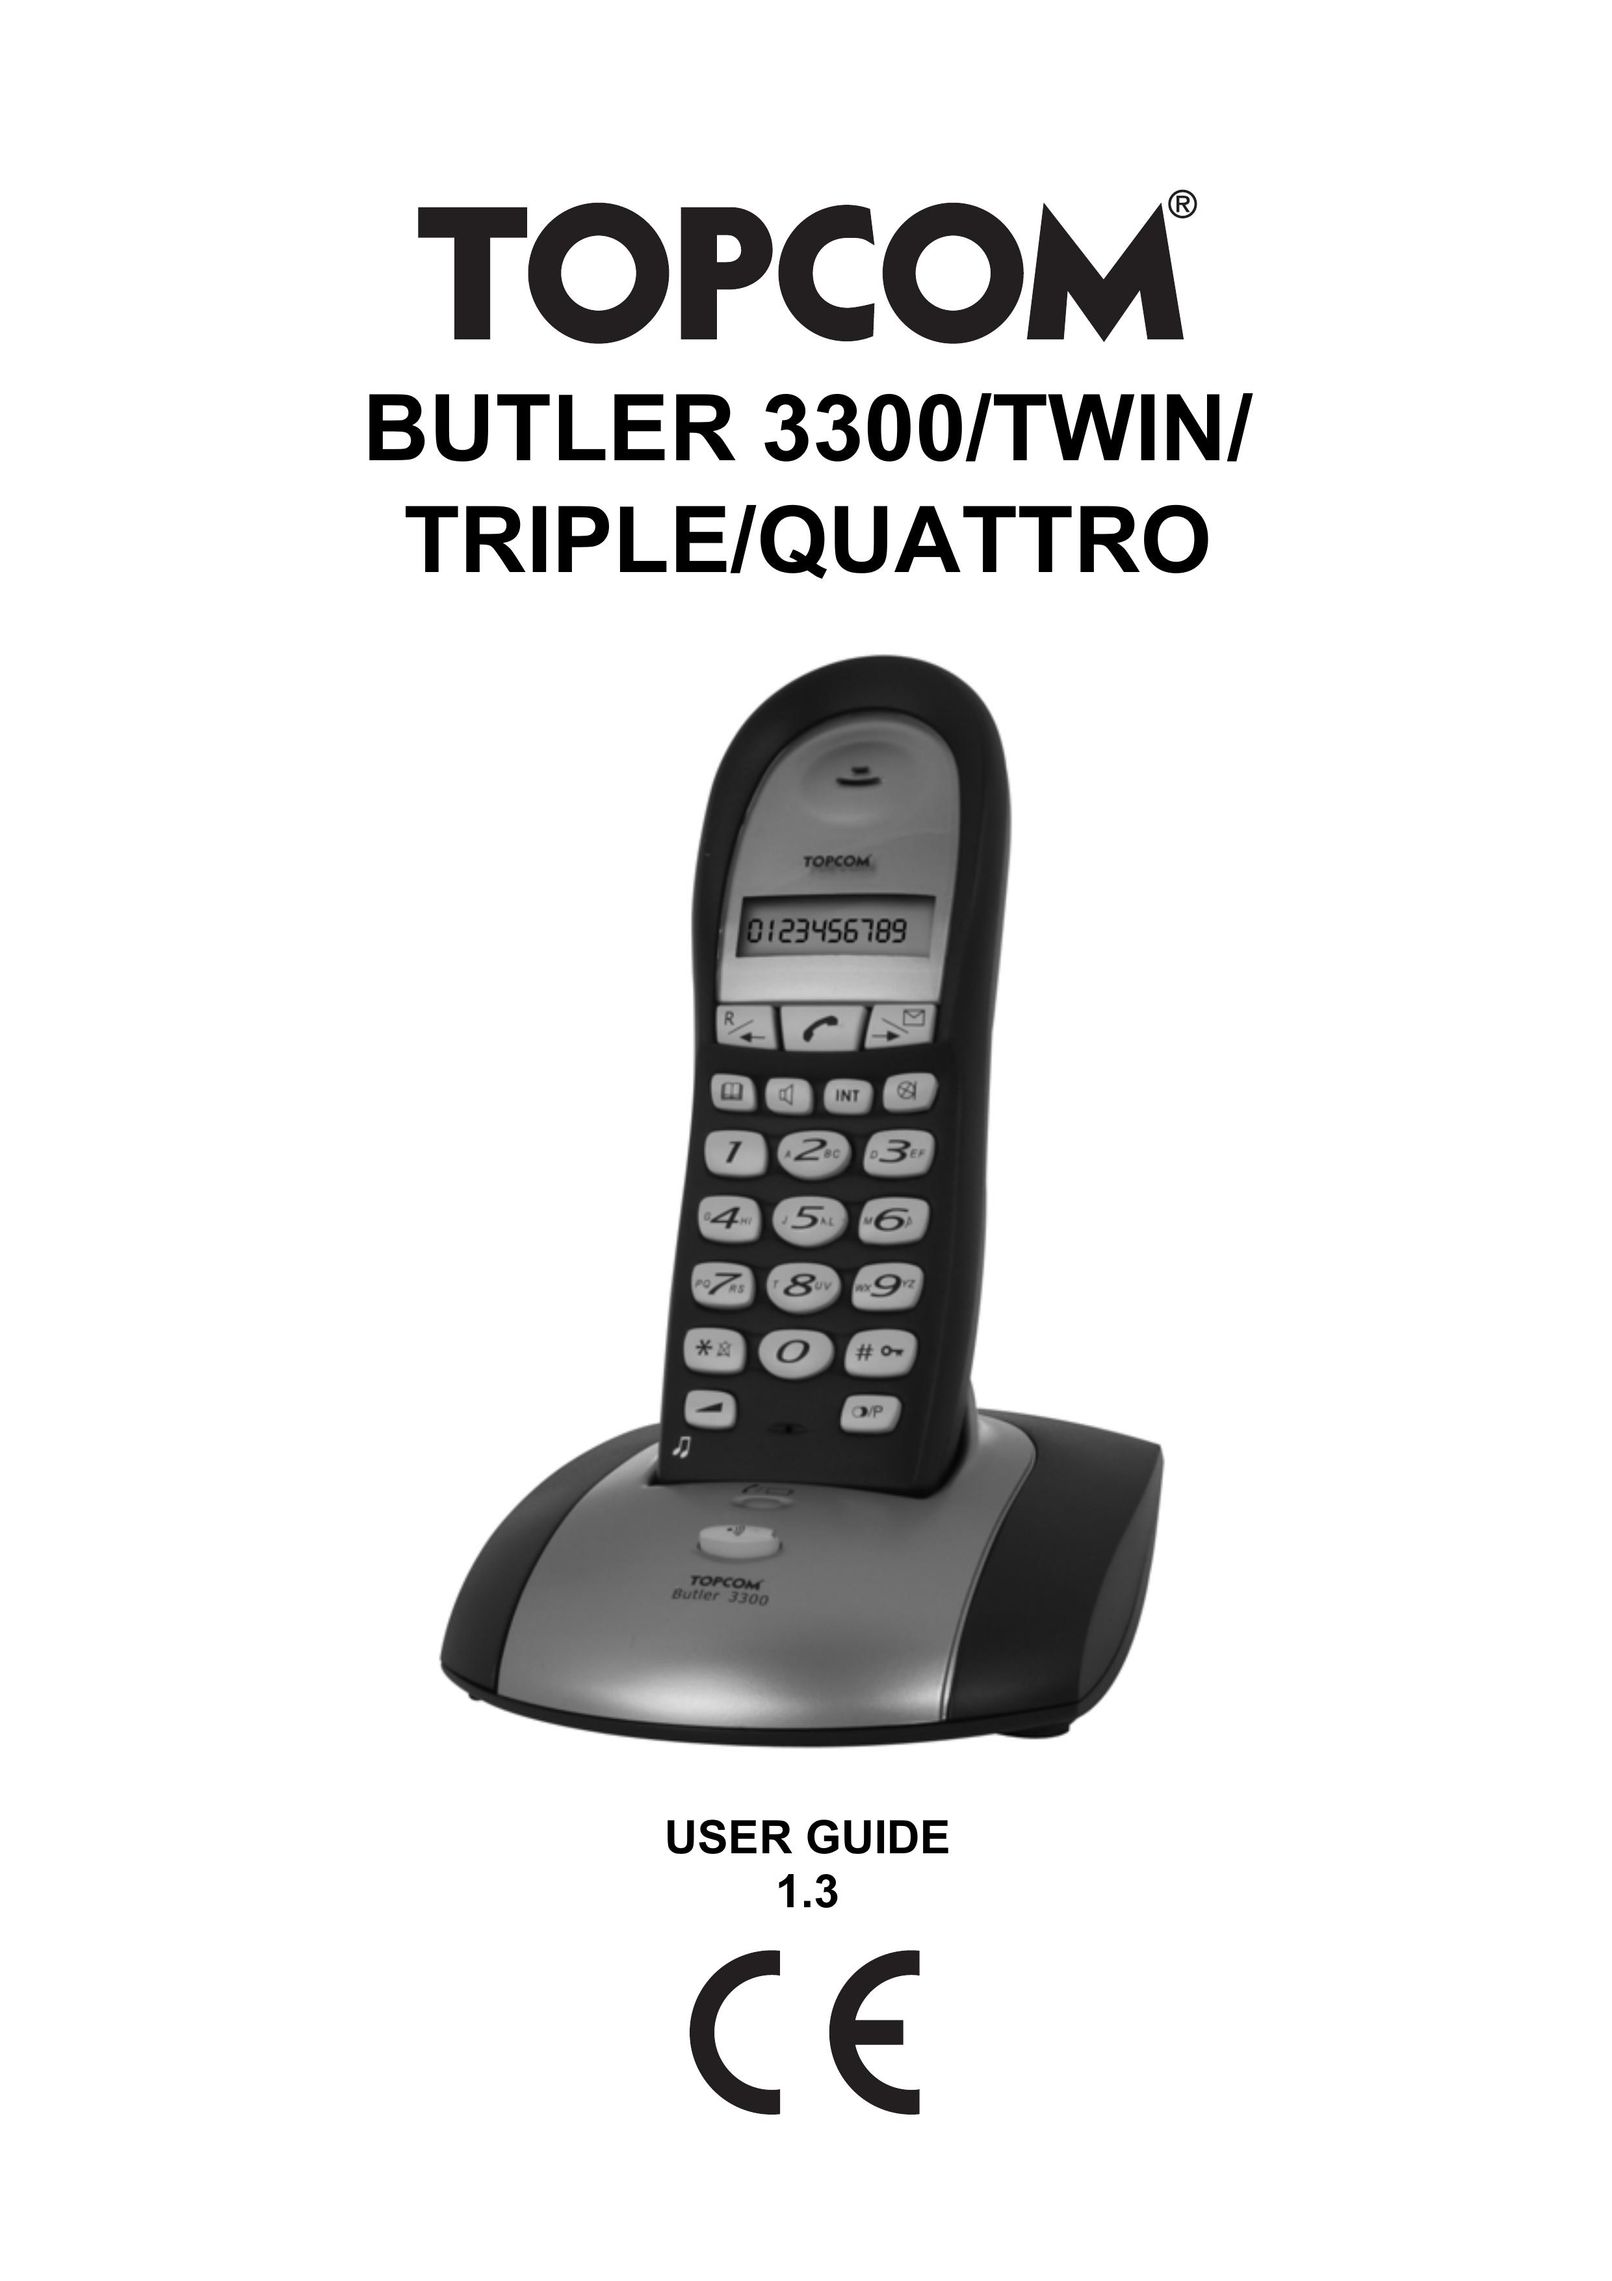 Topcom 3300/Twin Cordless Telephone User Manual